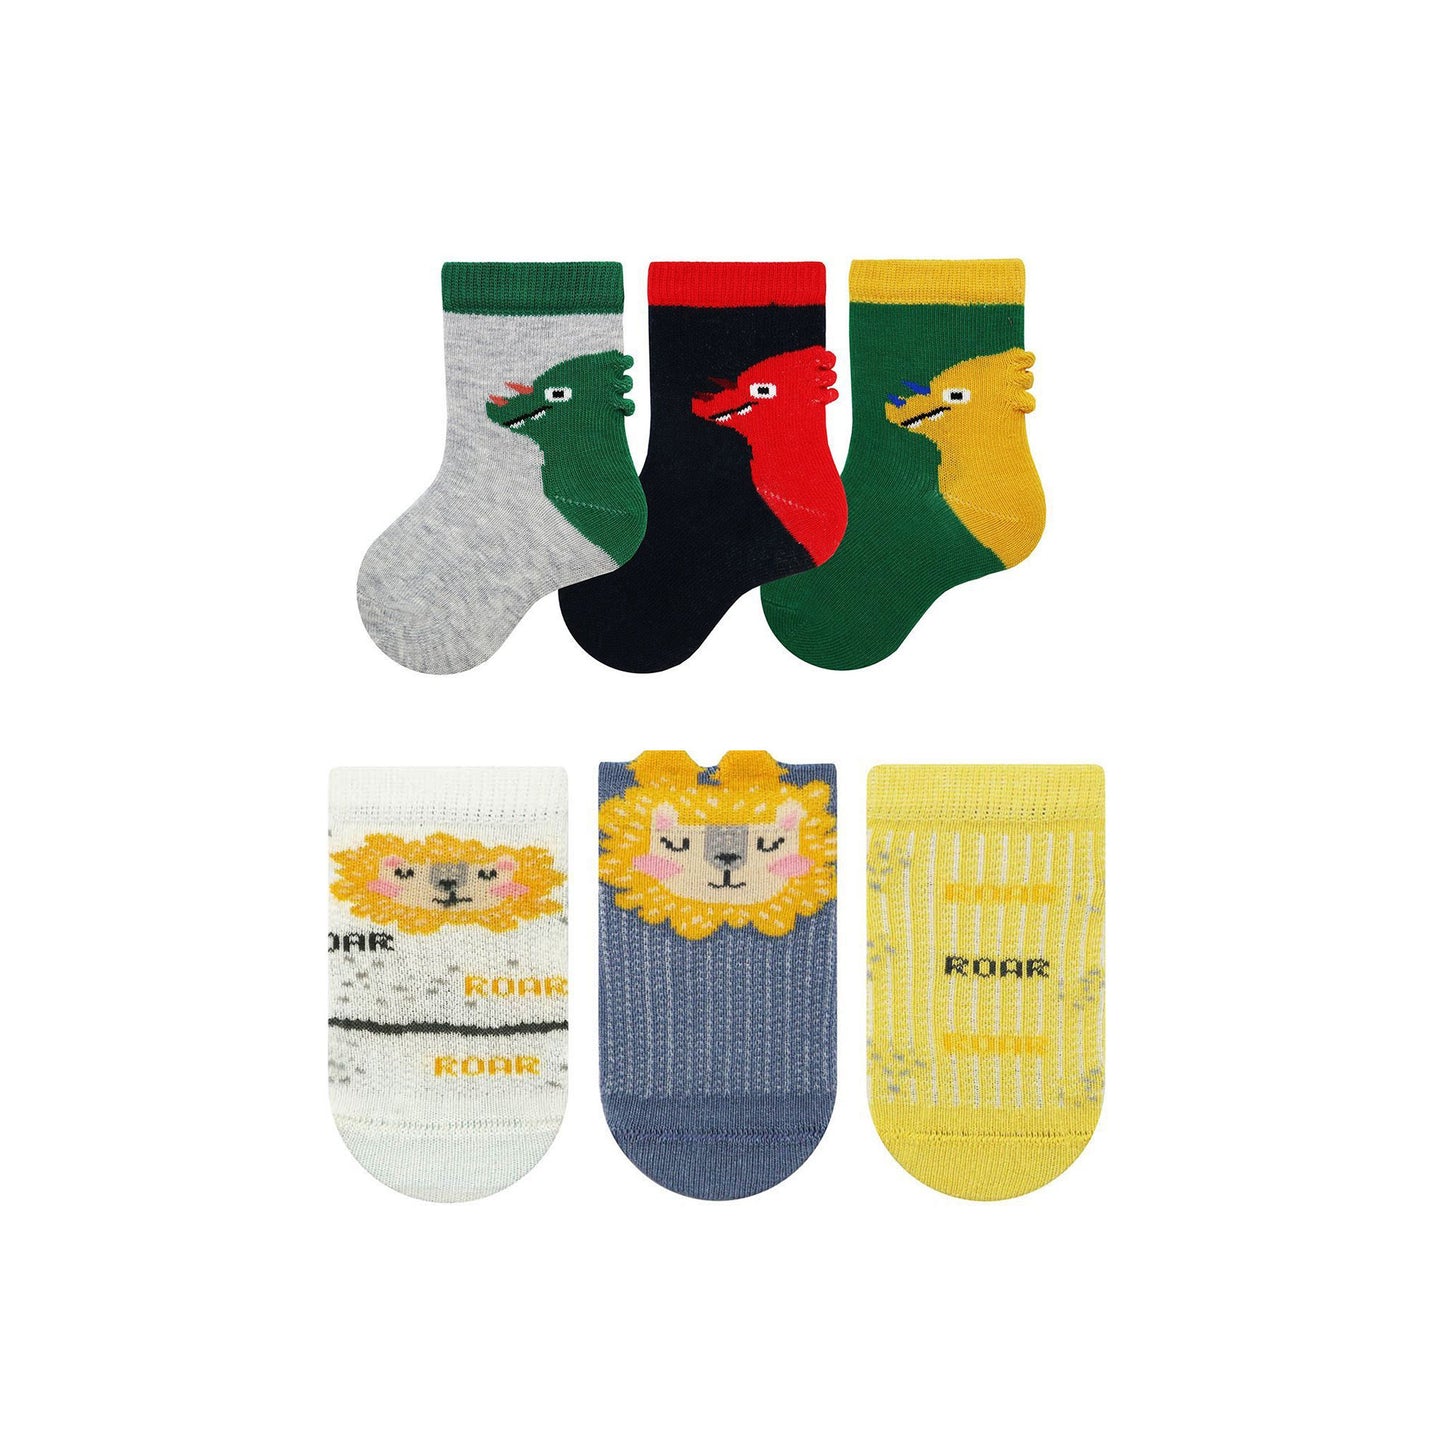 Bundle Baby Socks Gift Box, Baby Shower Gift Box Ideas, Bundle 3d Newborn Sock, Animal-Themed Baby Sock, Infant Sock Gifts, First Birthday